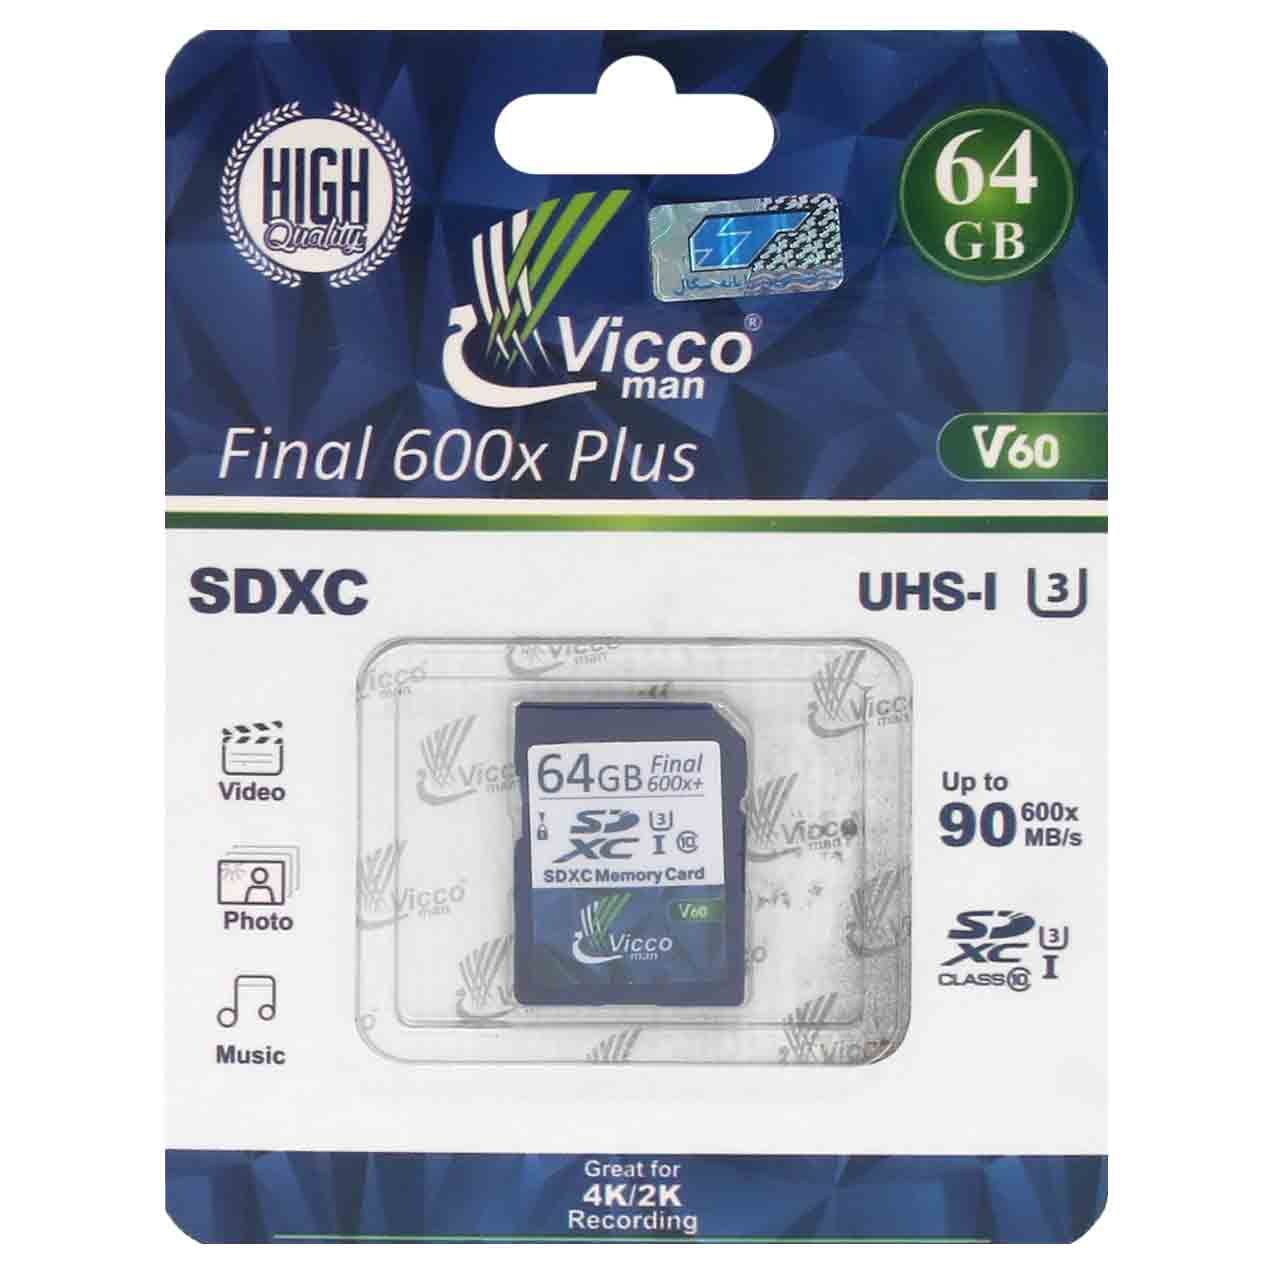 Vicco SDHC - Final 600x V60 - 64GB